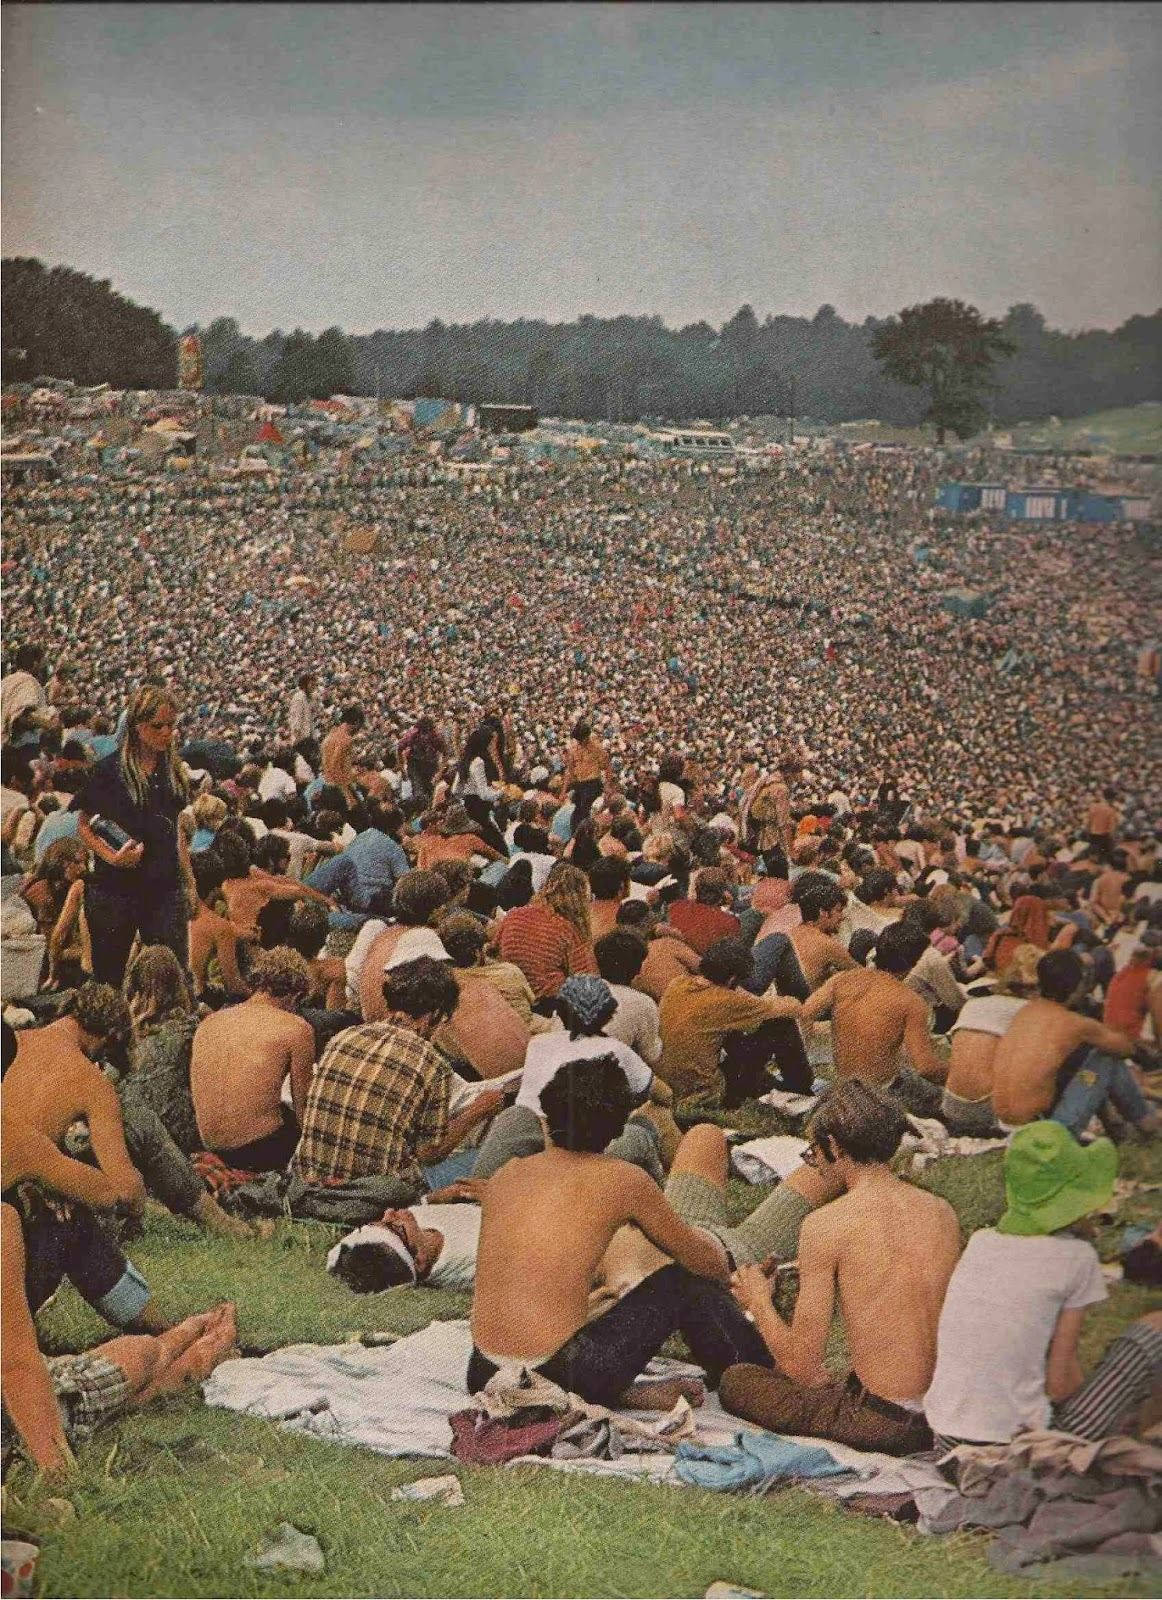 Woodstock 1969 Crowd Wallpaper